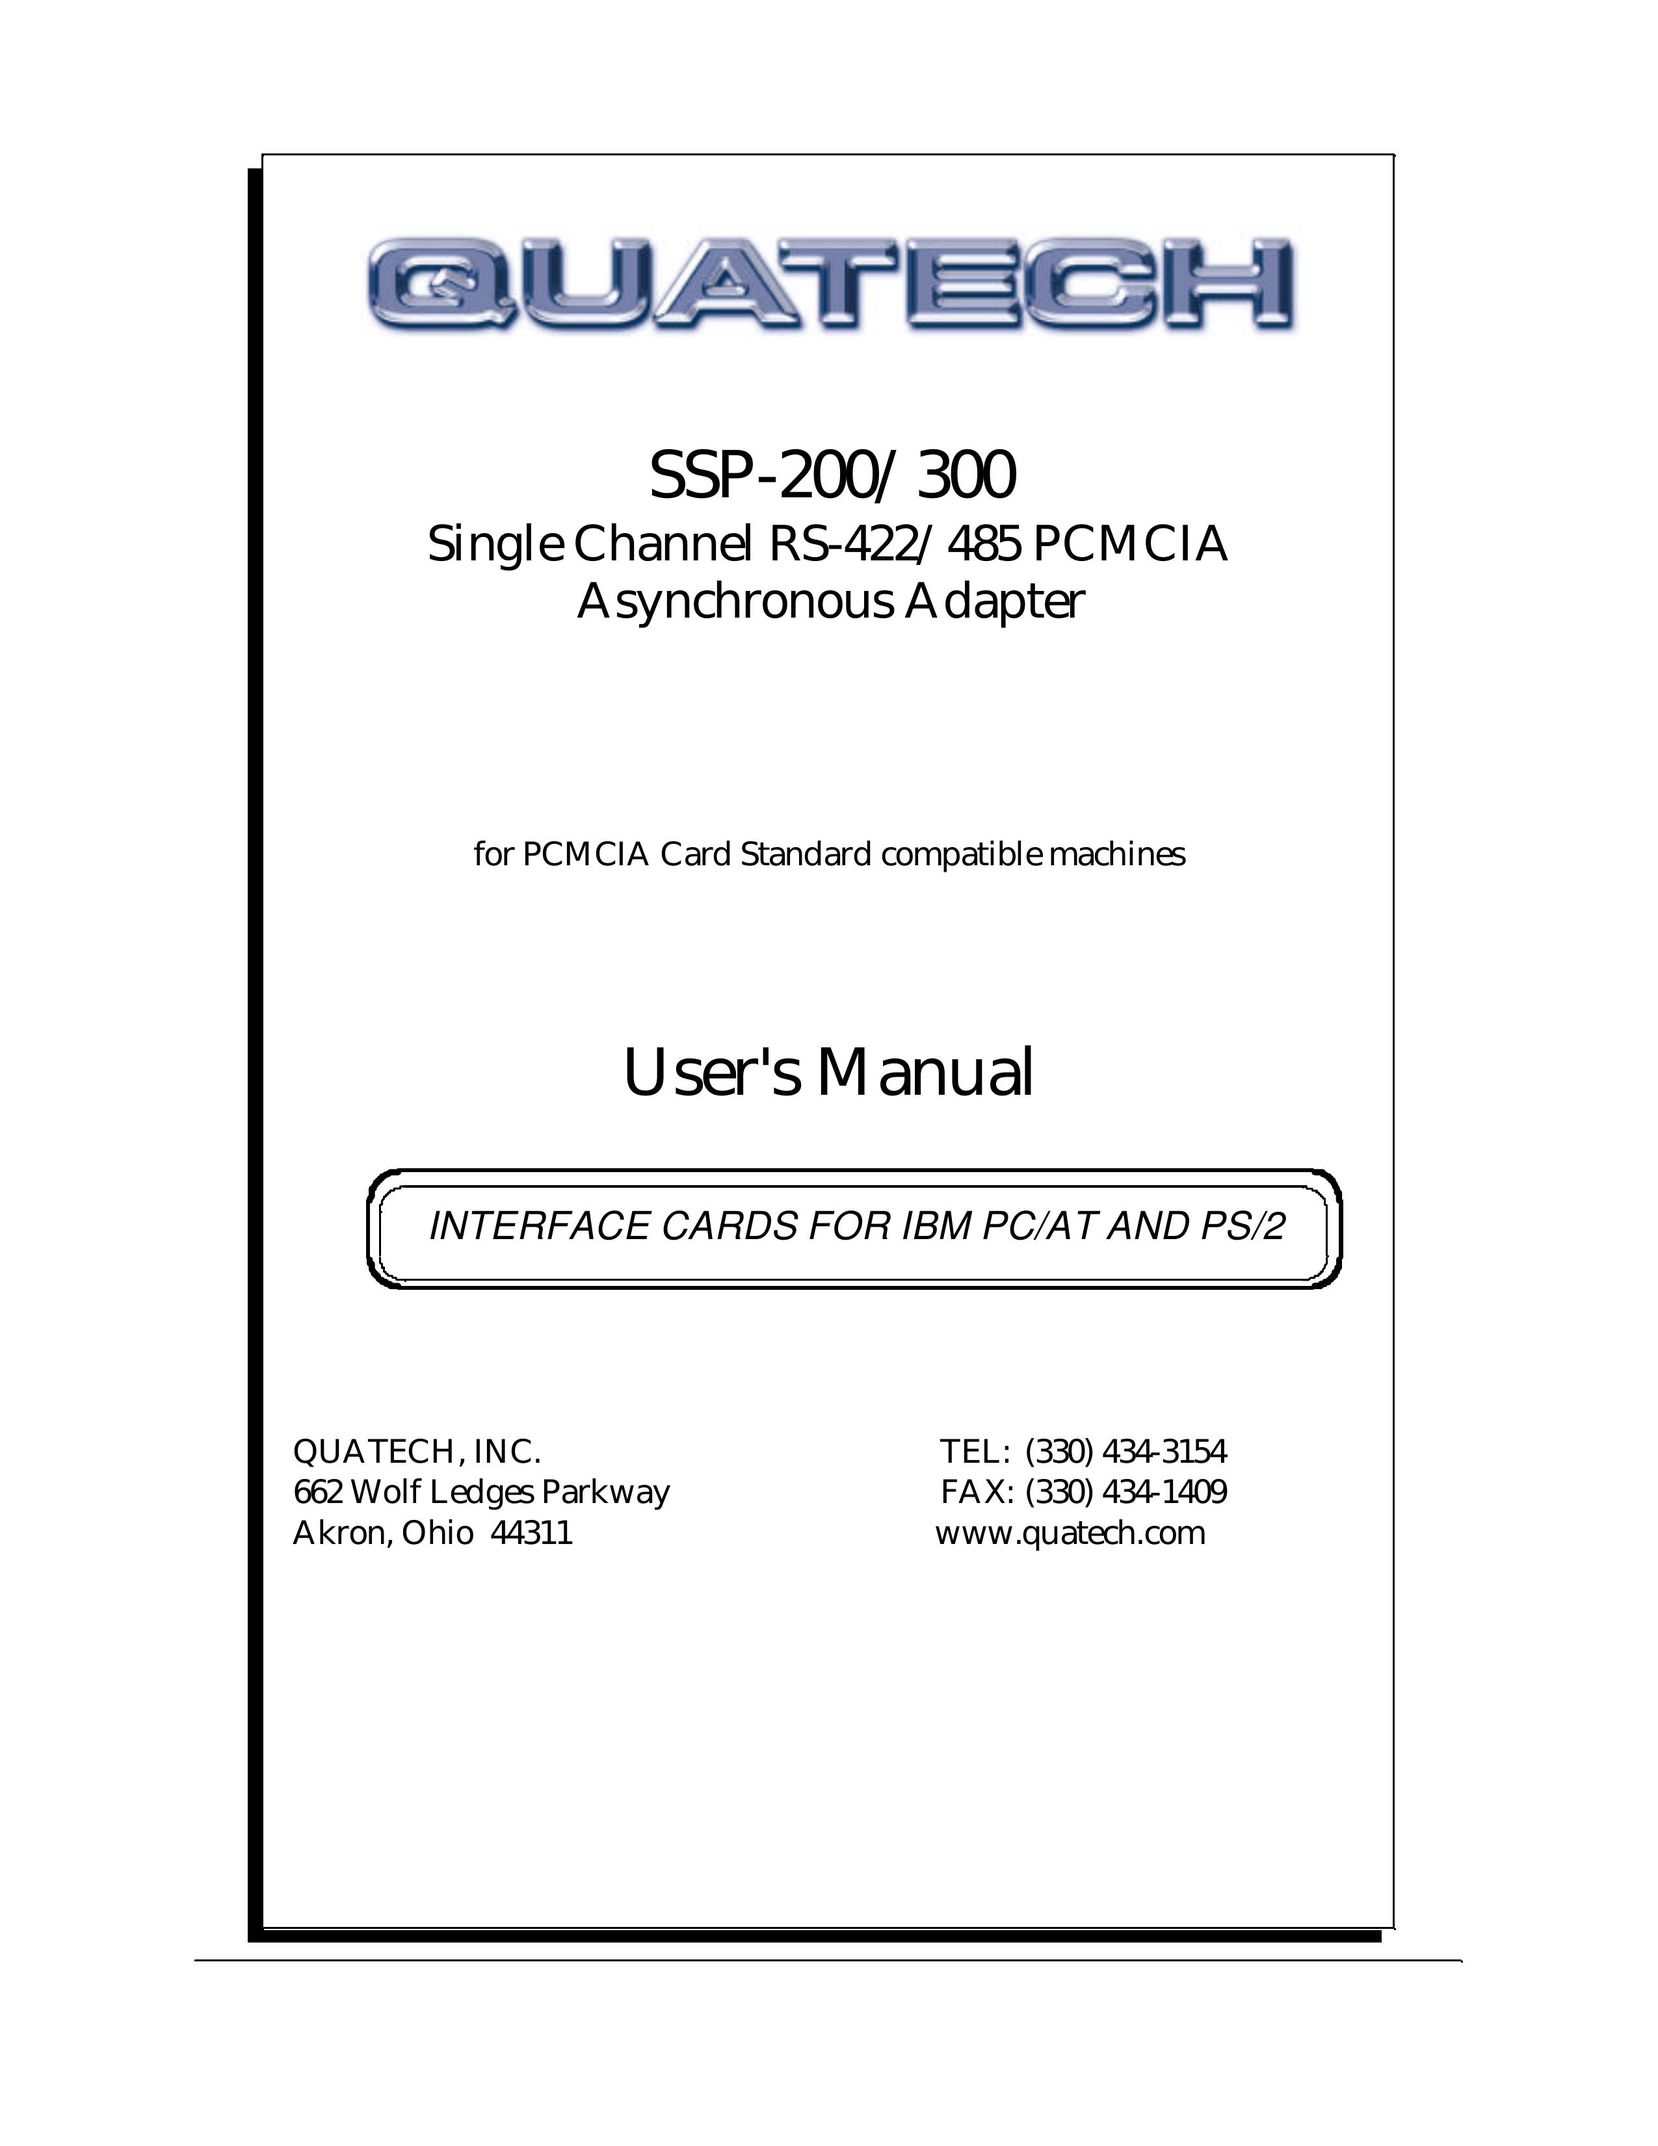 Quatech SSP-200 Network Card User Manual